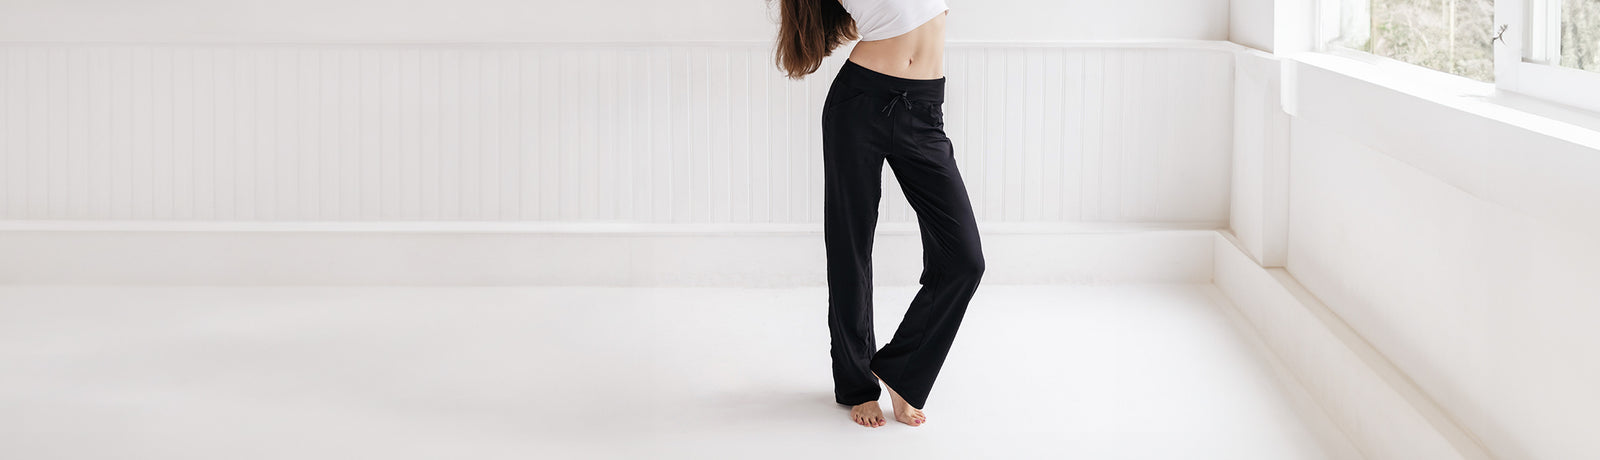  Yogipace Petite Womens Lightweight Anti-Shrink Active Joggers  Lounge Sweatpants Yoga Jogger Pants